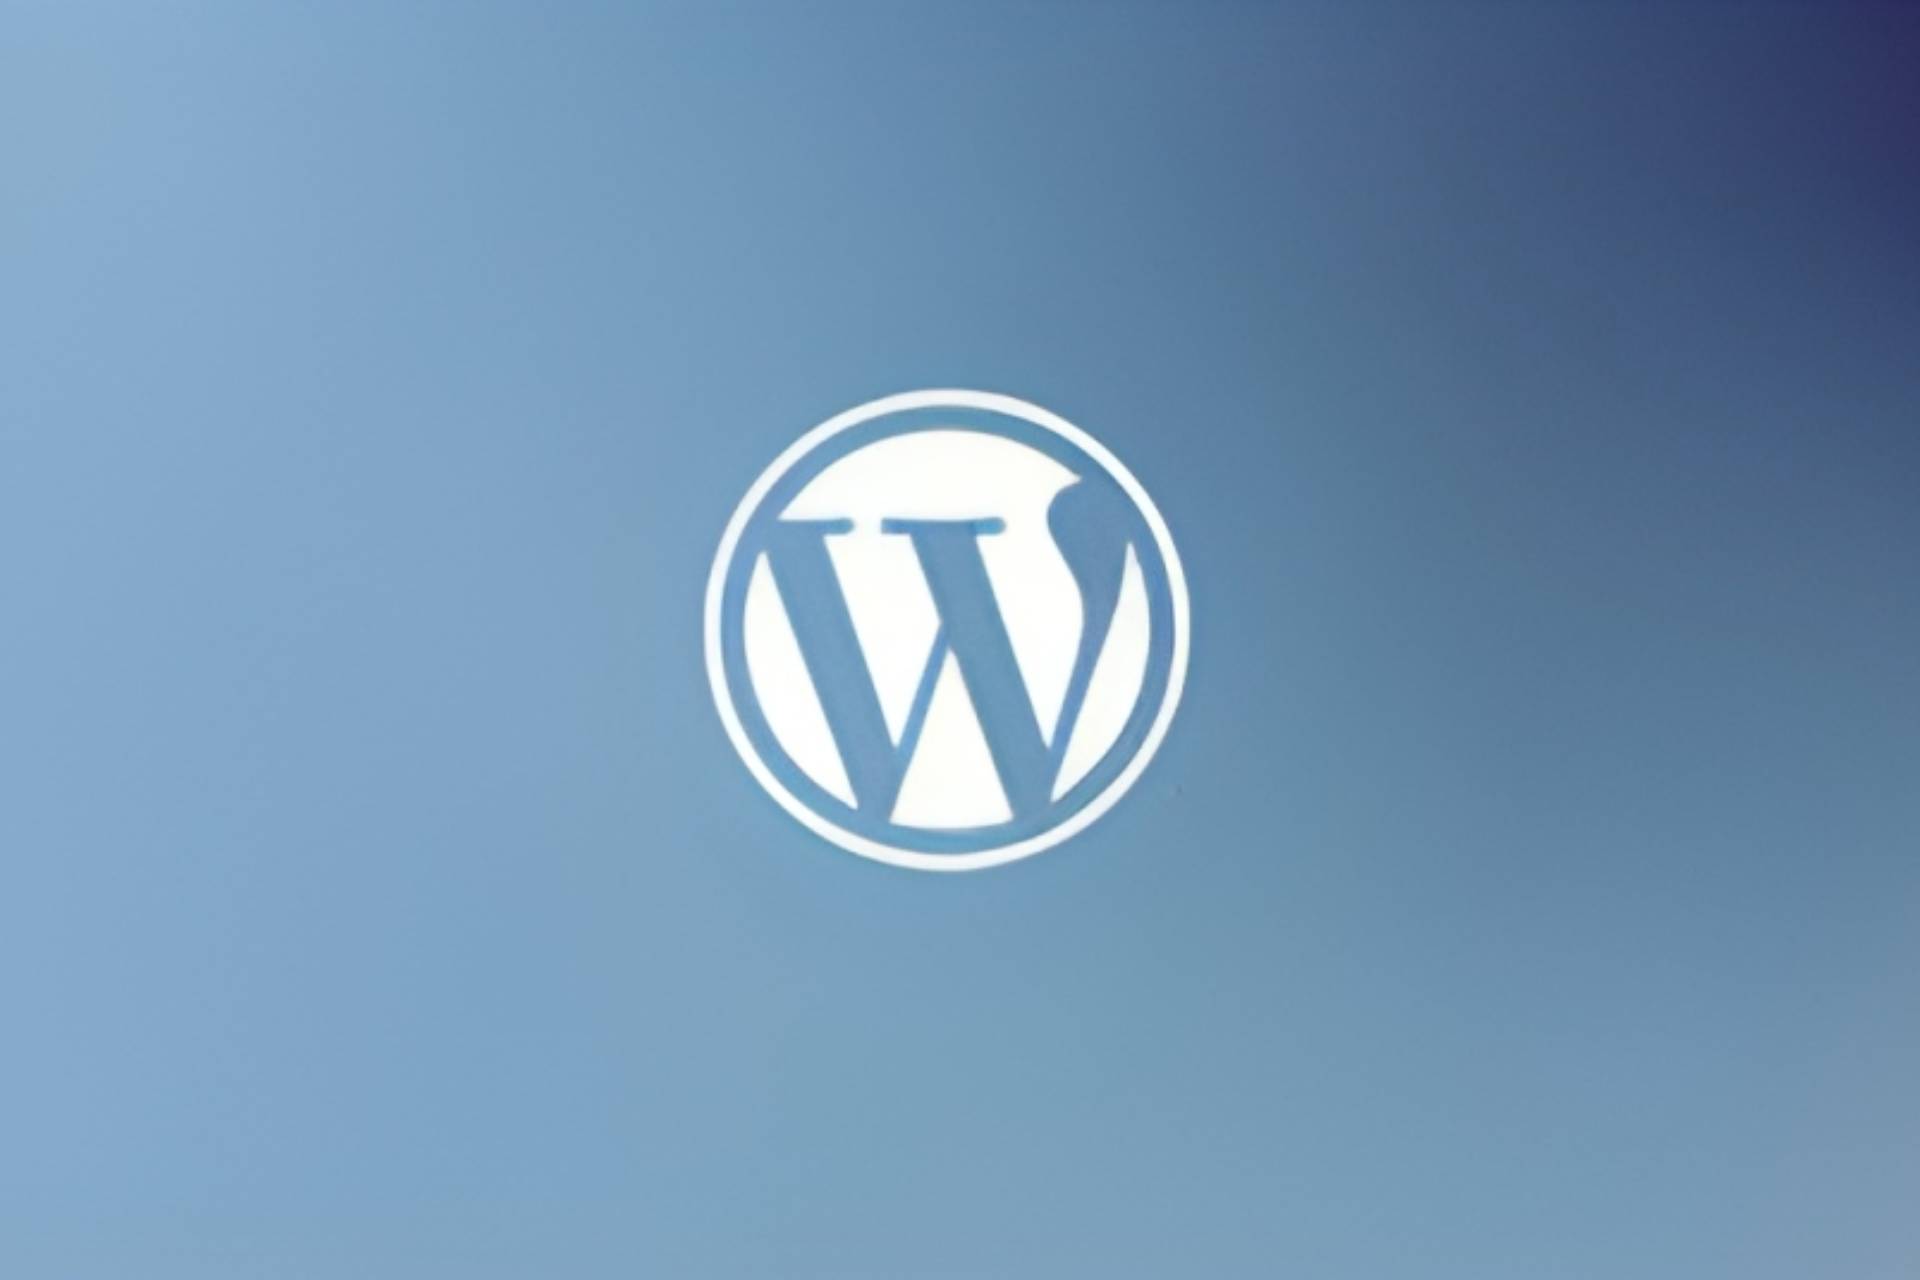 9 Ways to Improve Your Website with WordPress